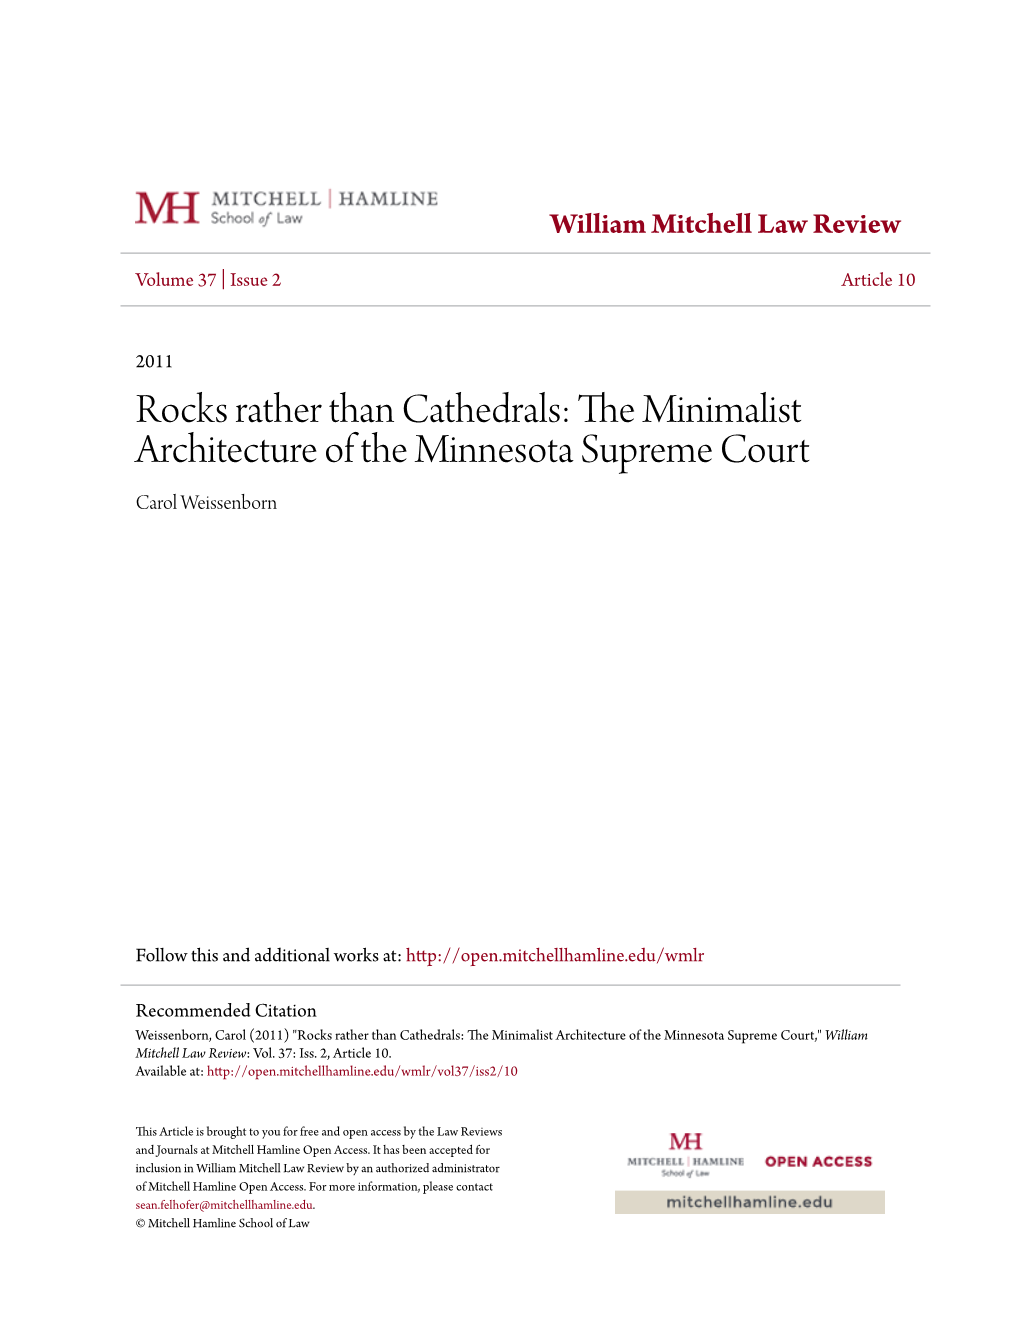 The Minimalist Architecture of the Minnesota Supreme Court1